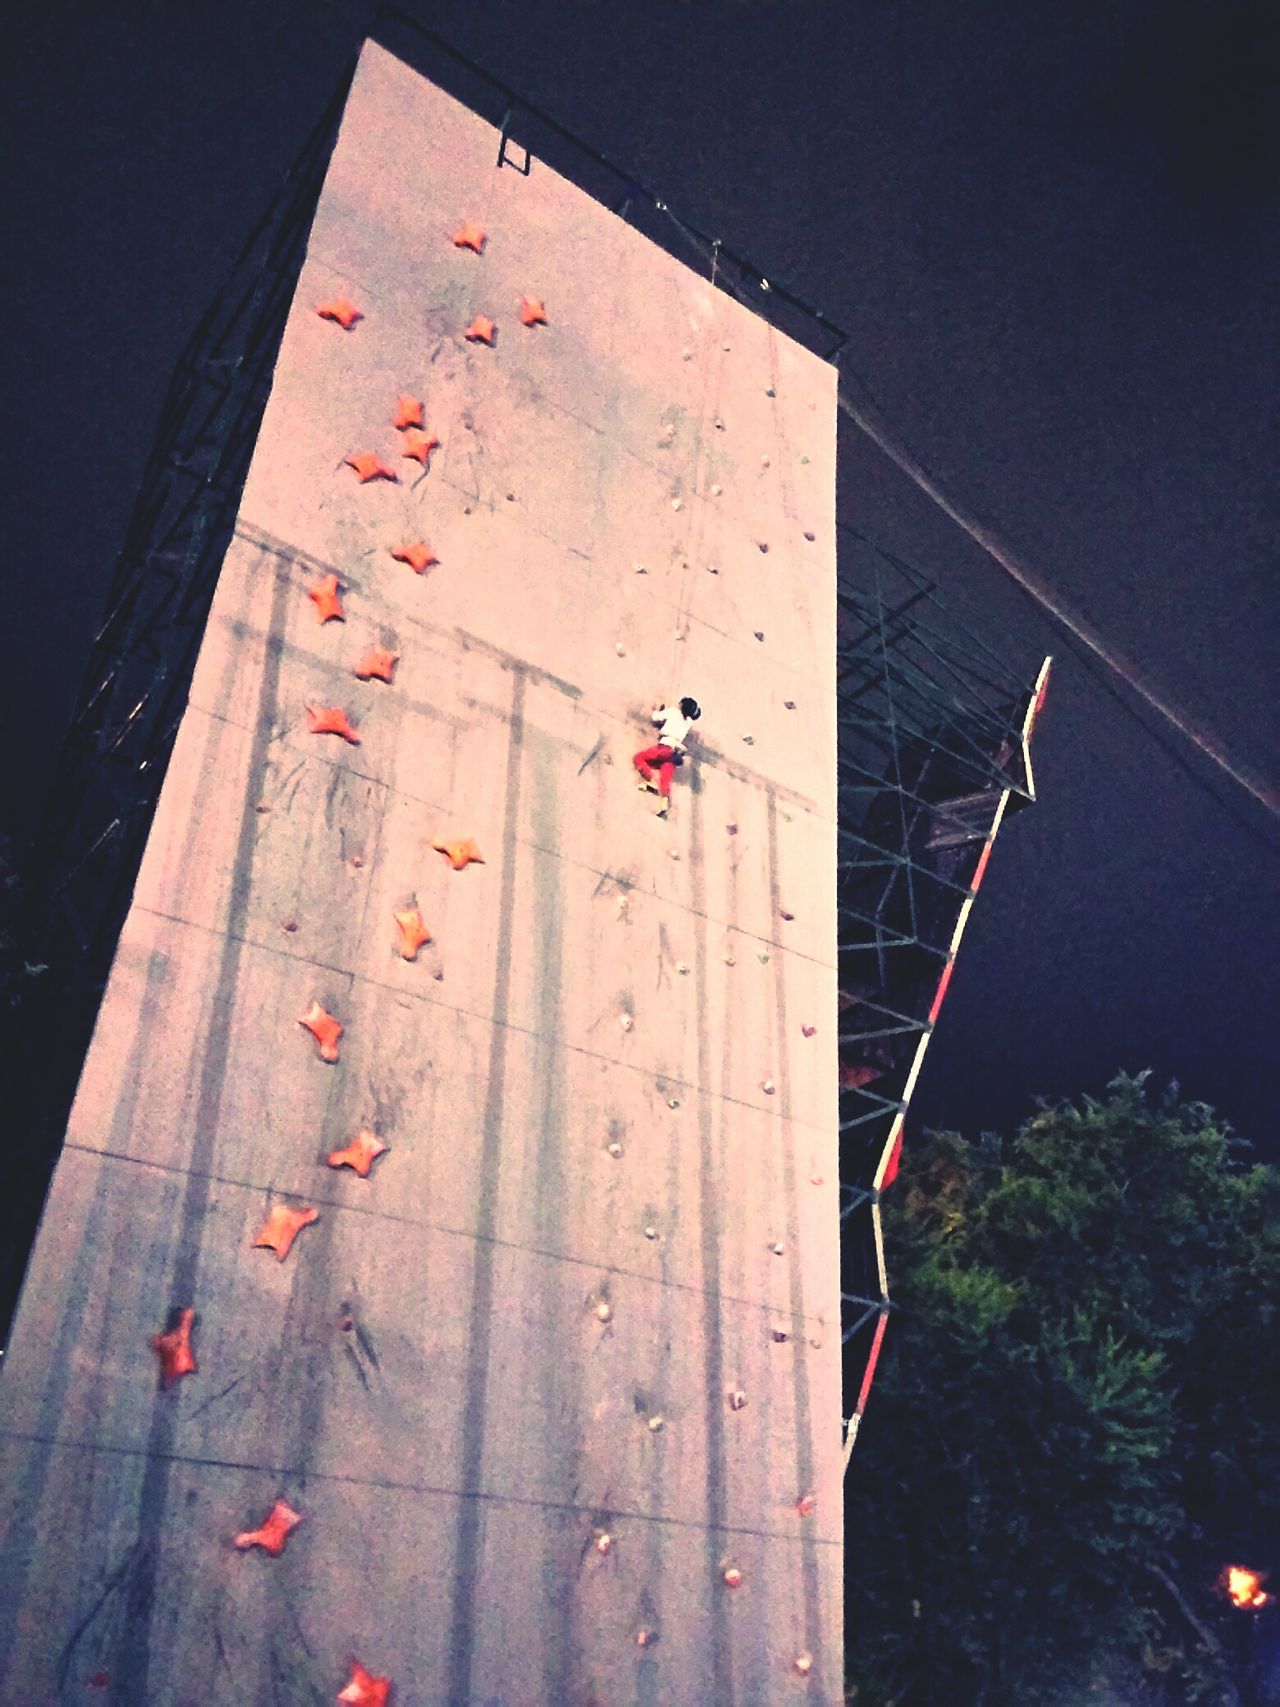 Night climber